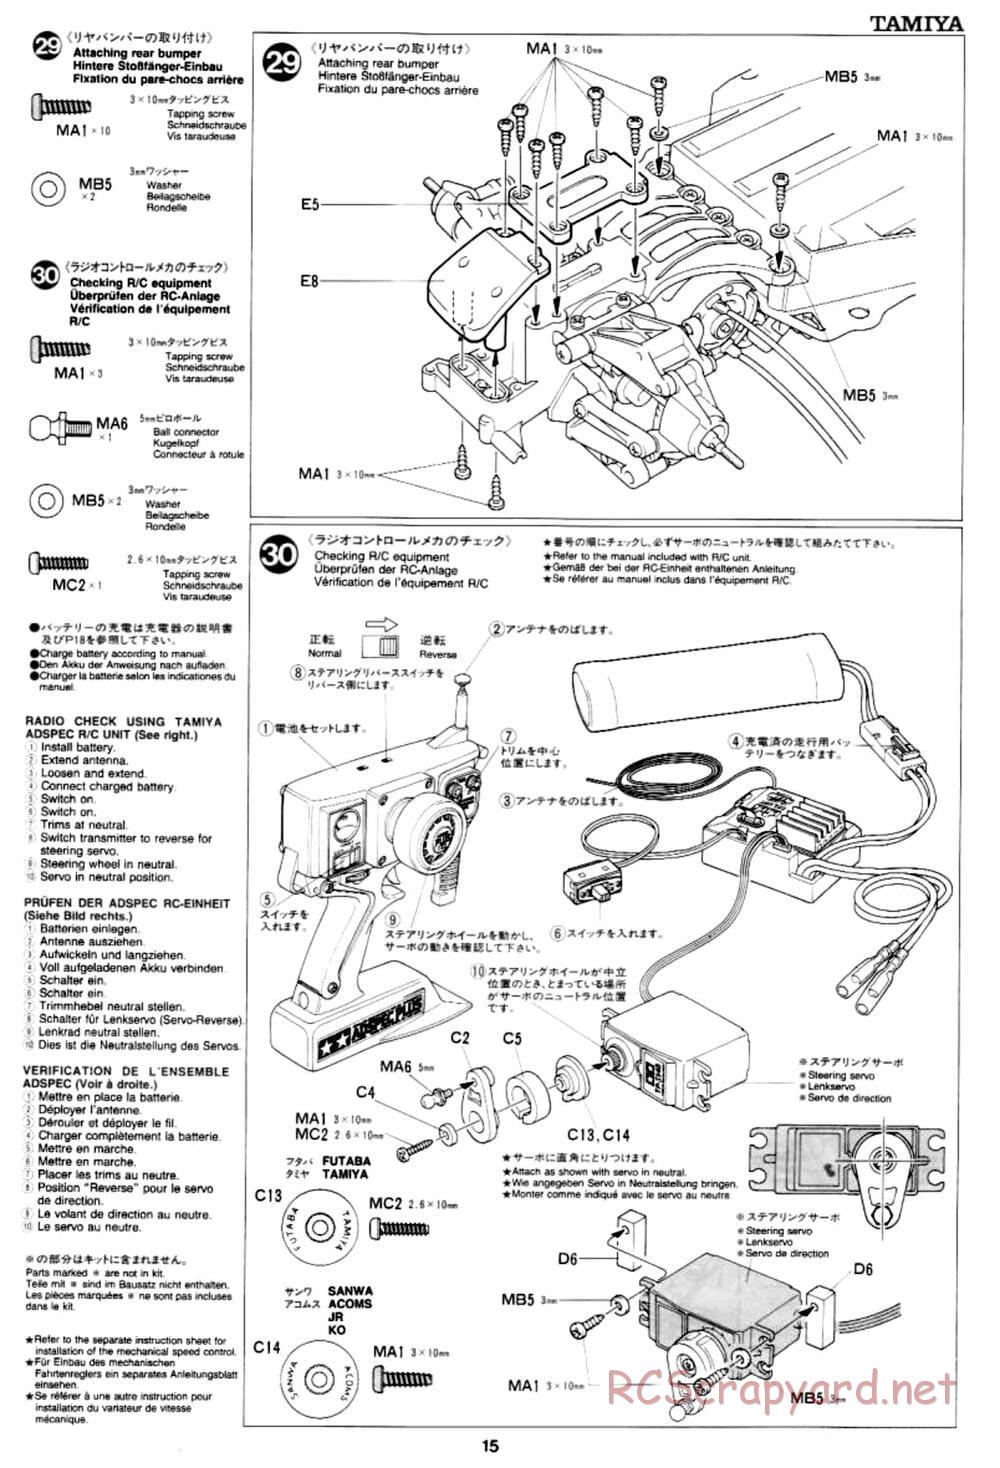 Tamiya - Mobil 1 NSX - TA-03R Chassis - Manual - Page 15